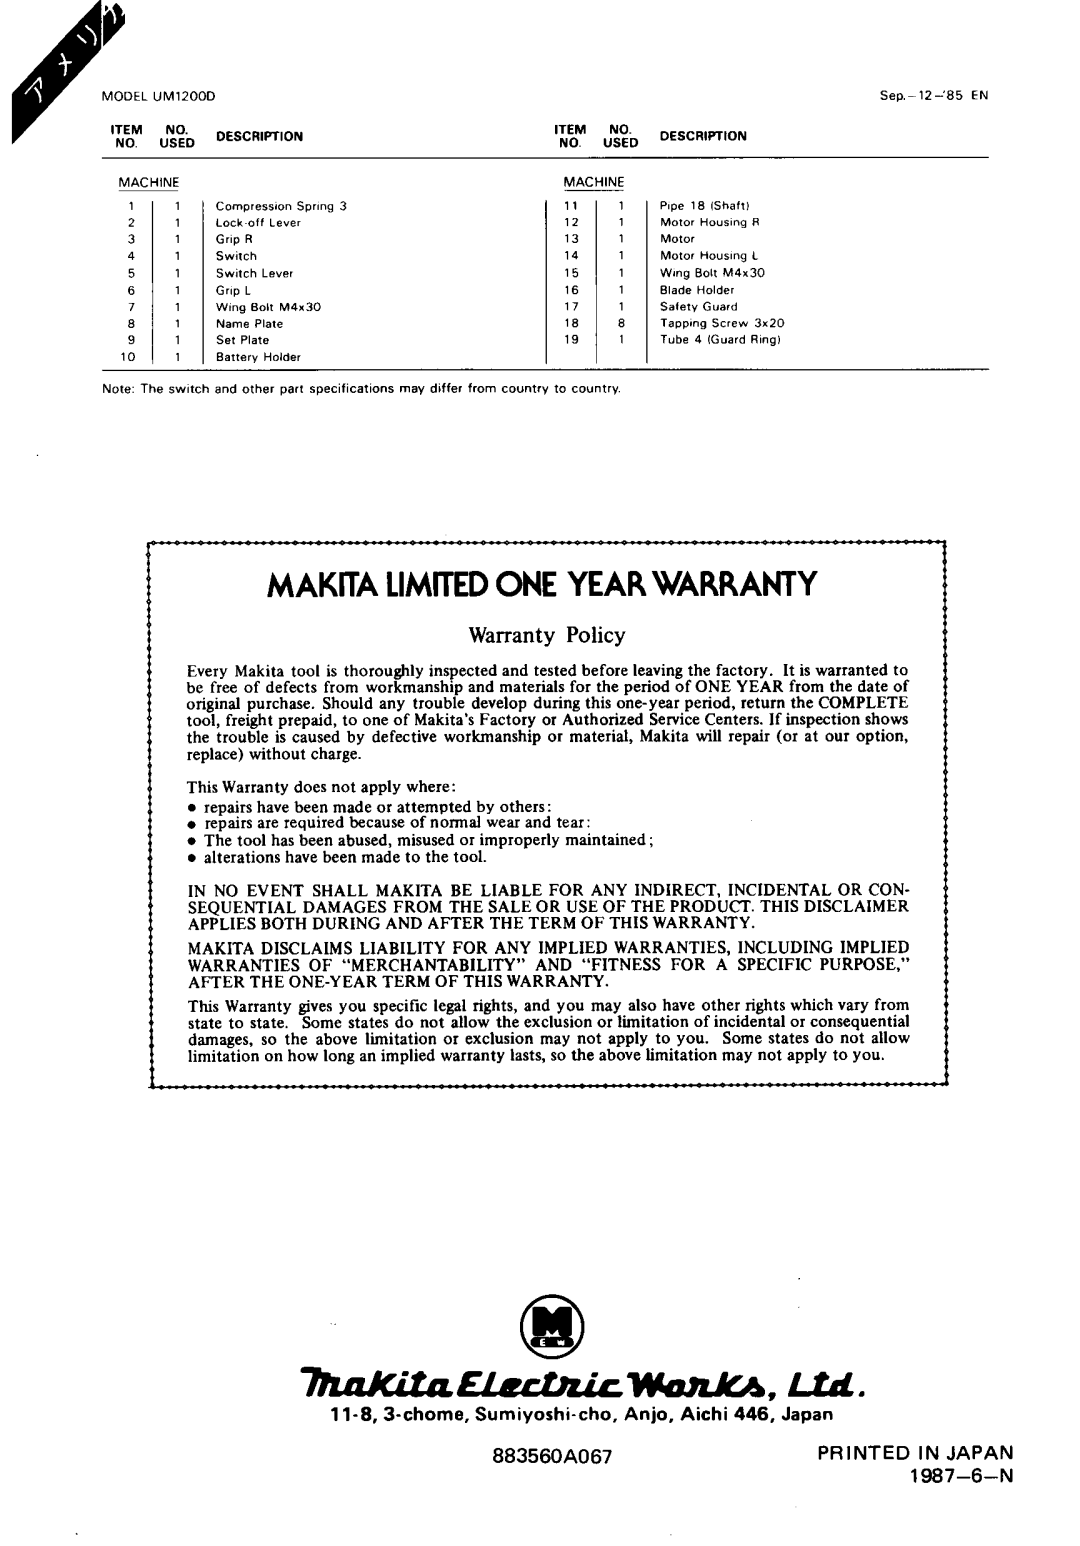 Makita UML2OOD Makita Limitedone Year Warranty, maKitaFIArtkrr- wu.nub,u, Warranty Policy, 883560A067, Printed In Japan 